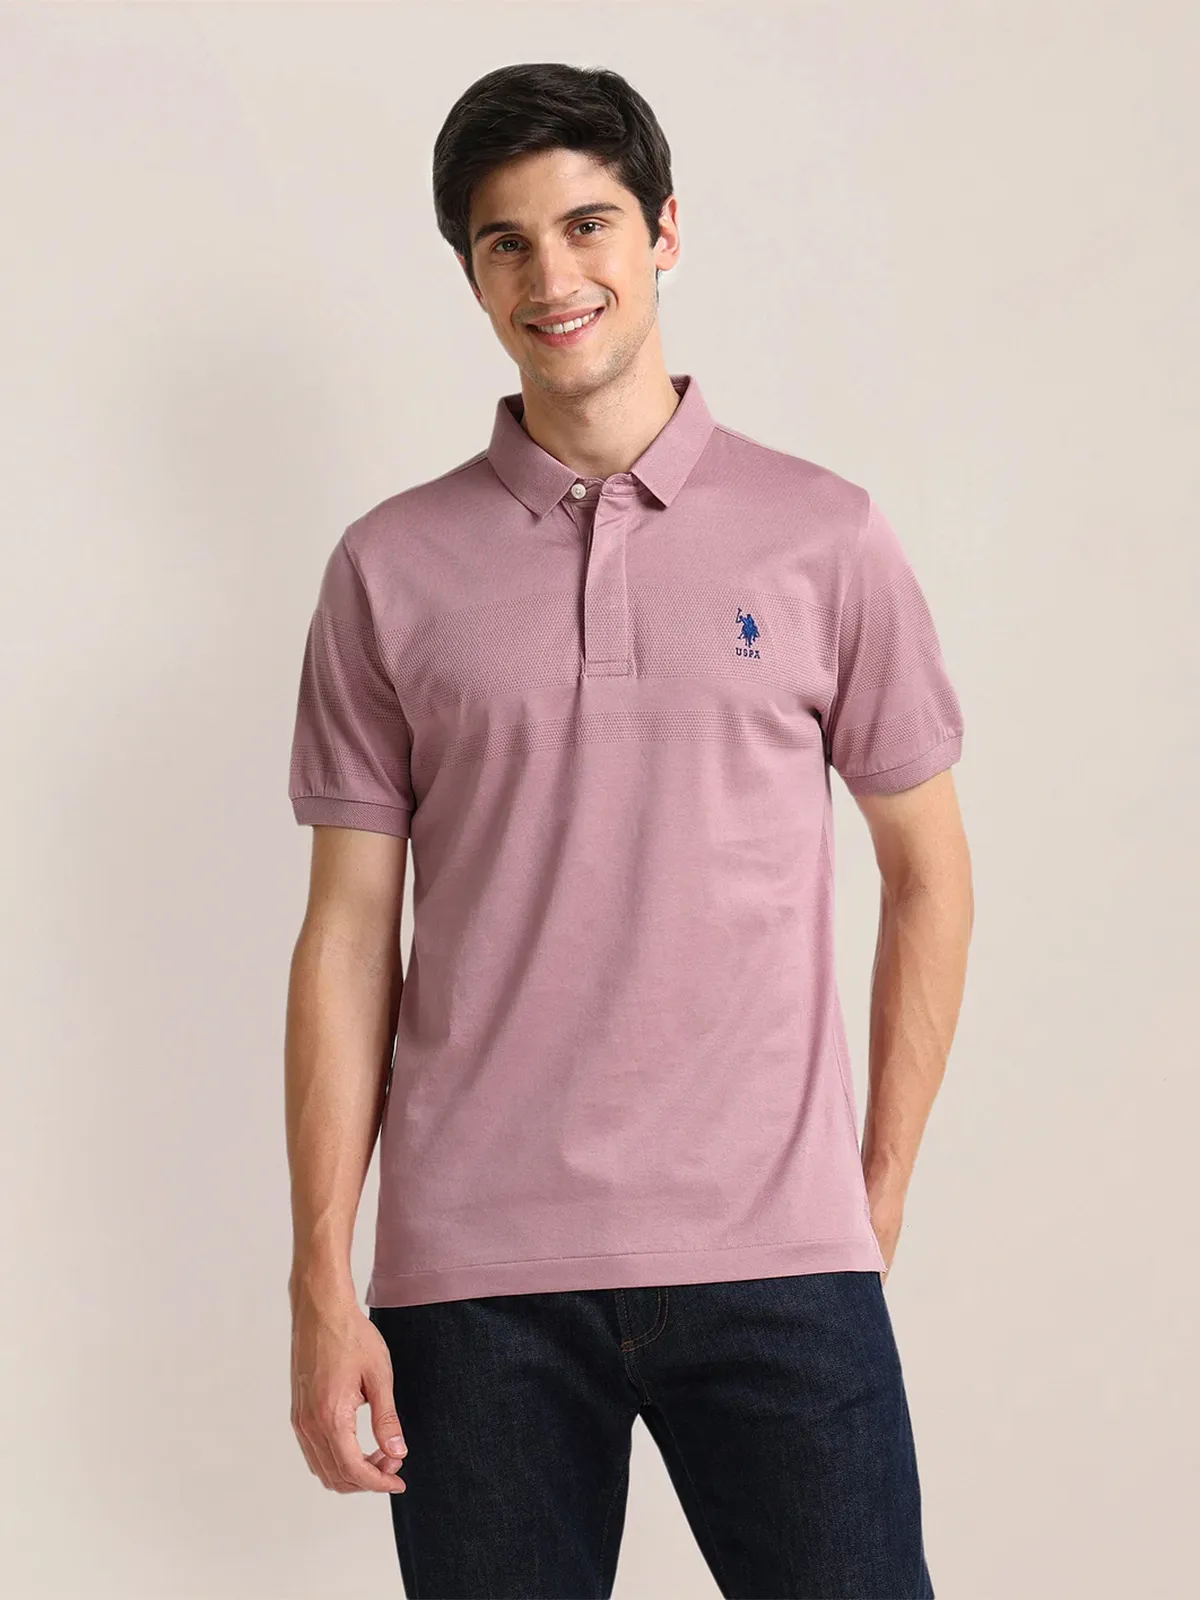 U S POLO ASSN mauve pink stripe polo t-shirt